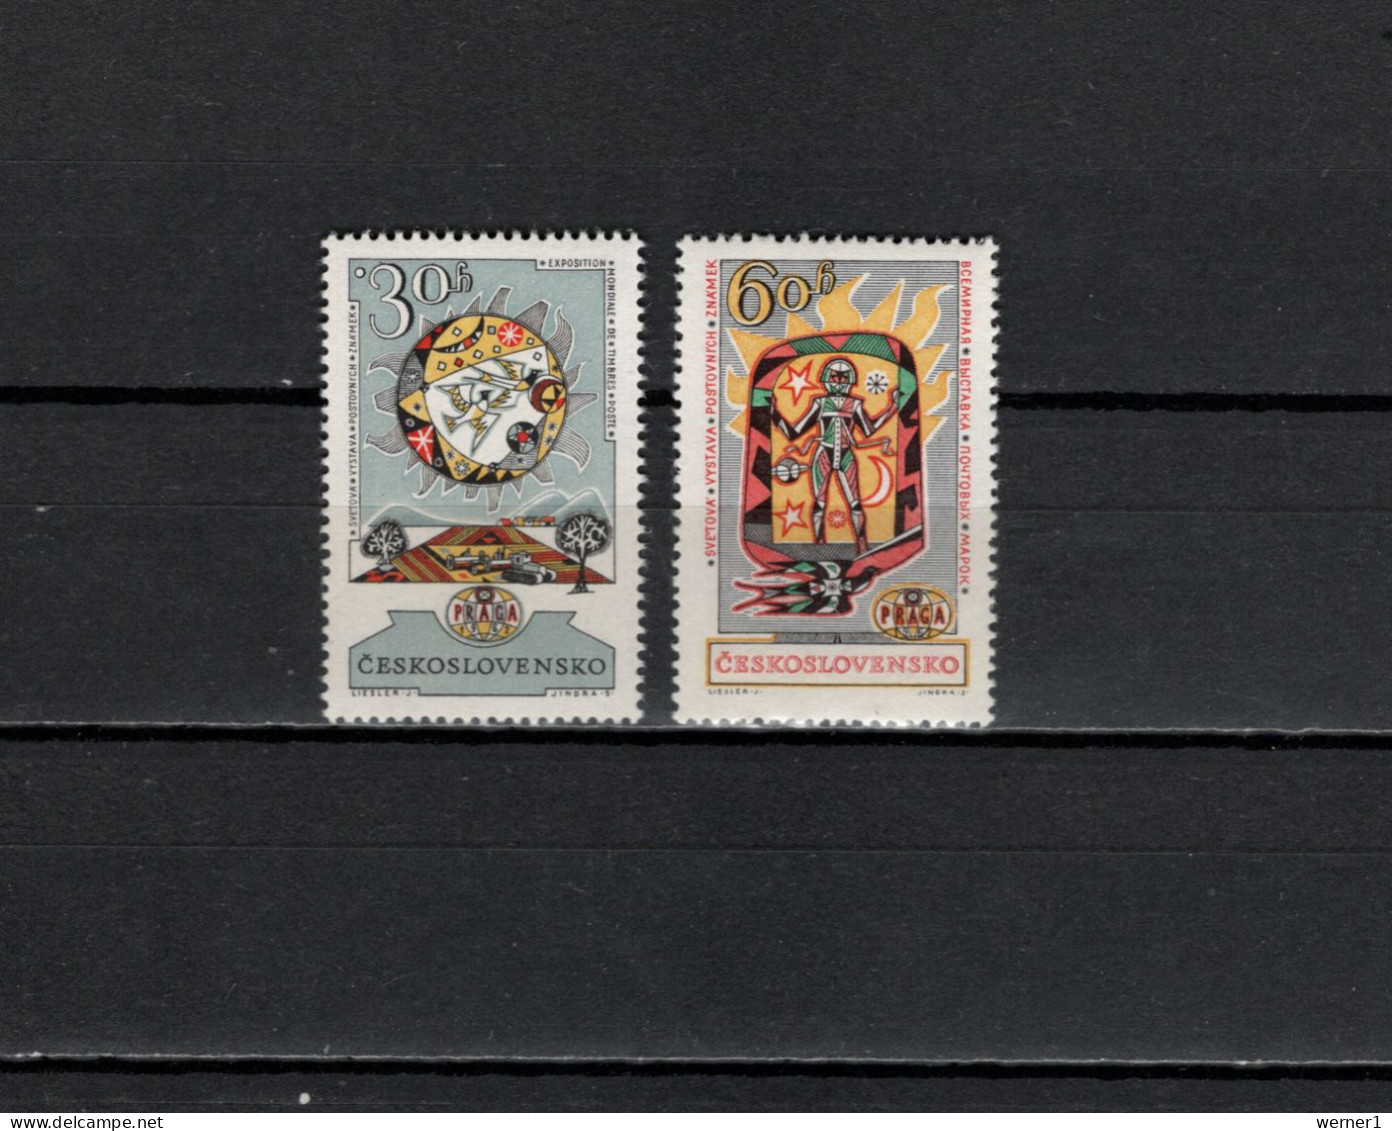 Czechoslovakia 1962 Space, Praga '62, 2 Stamps MNH - Europe